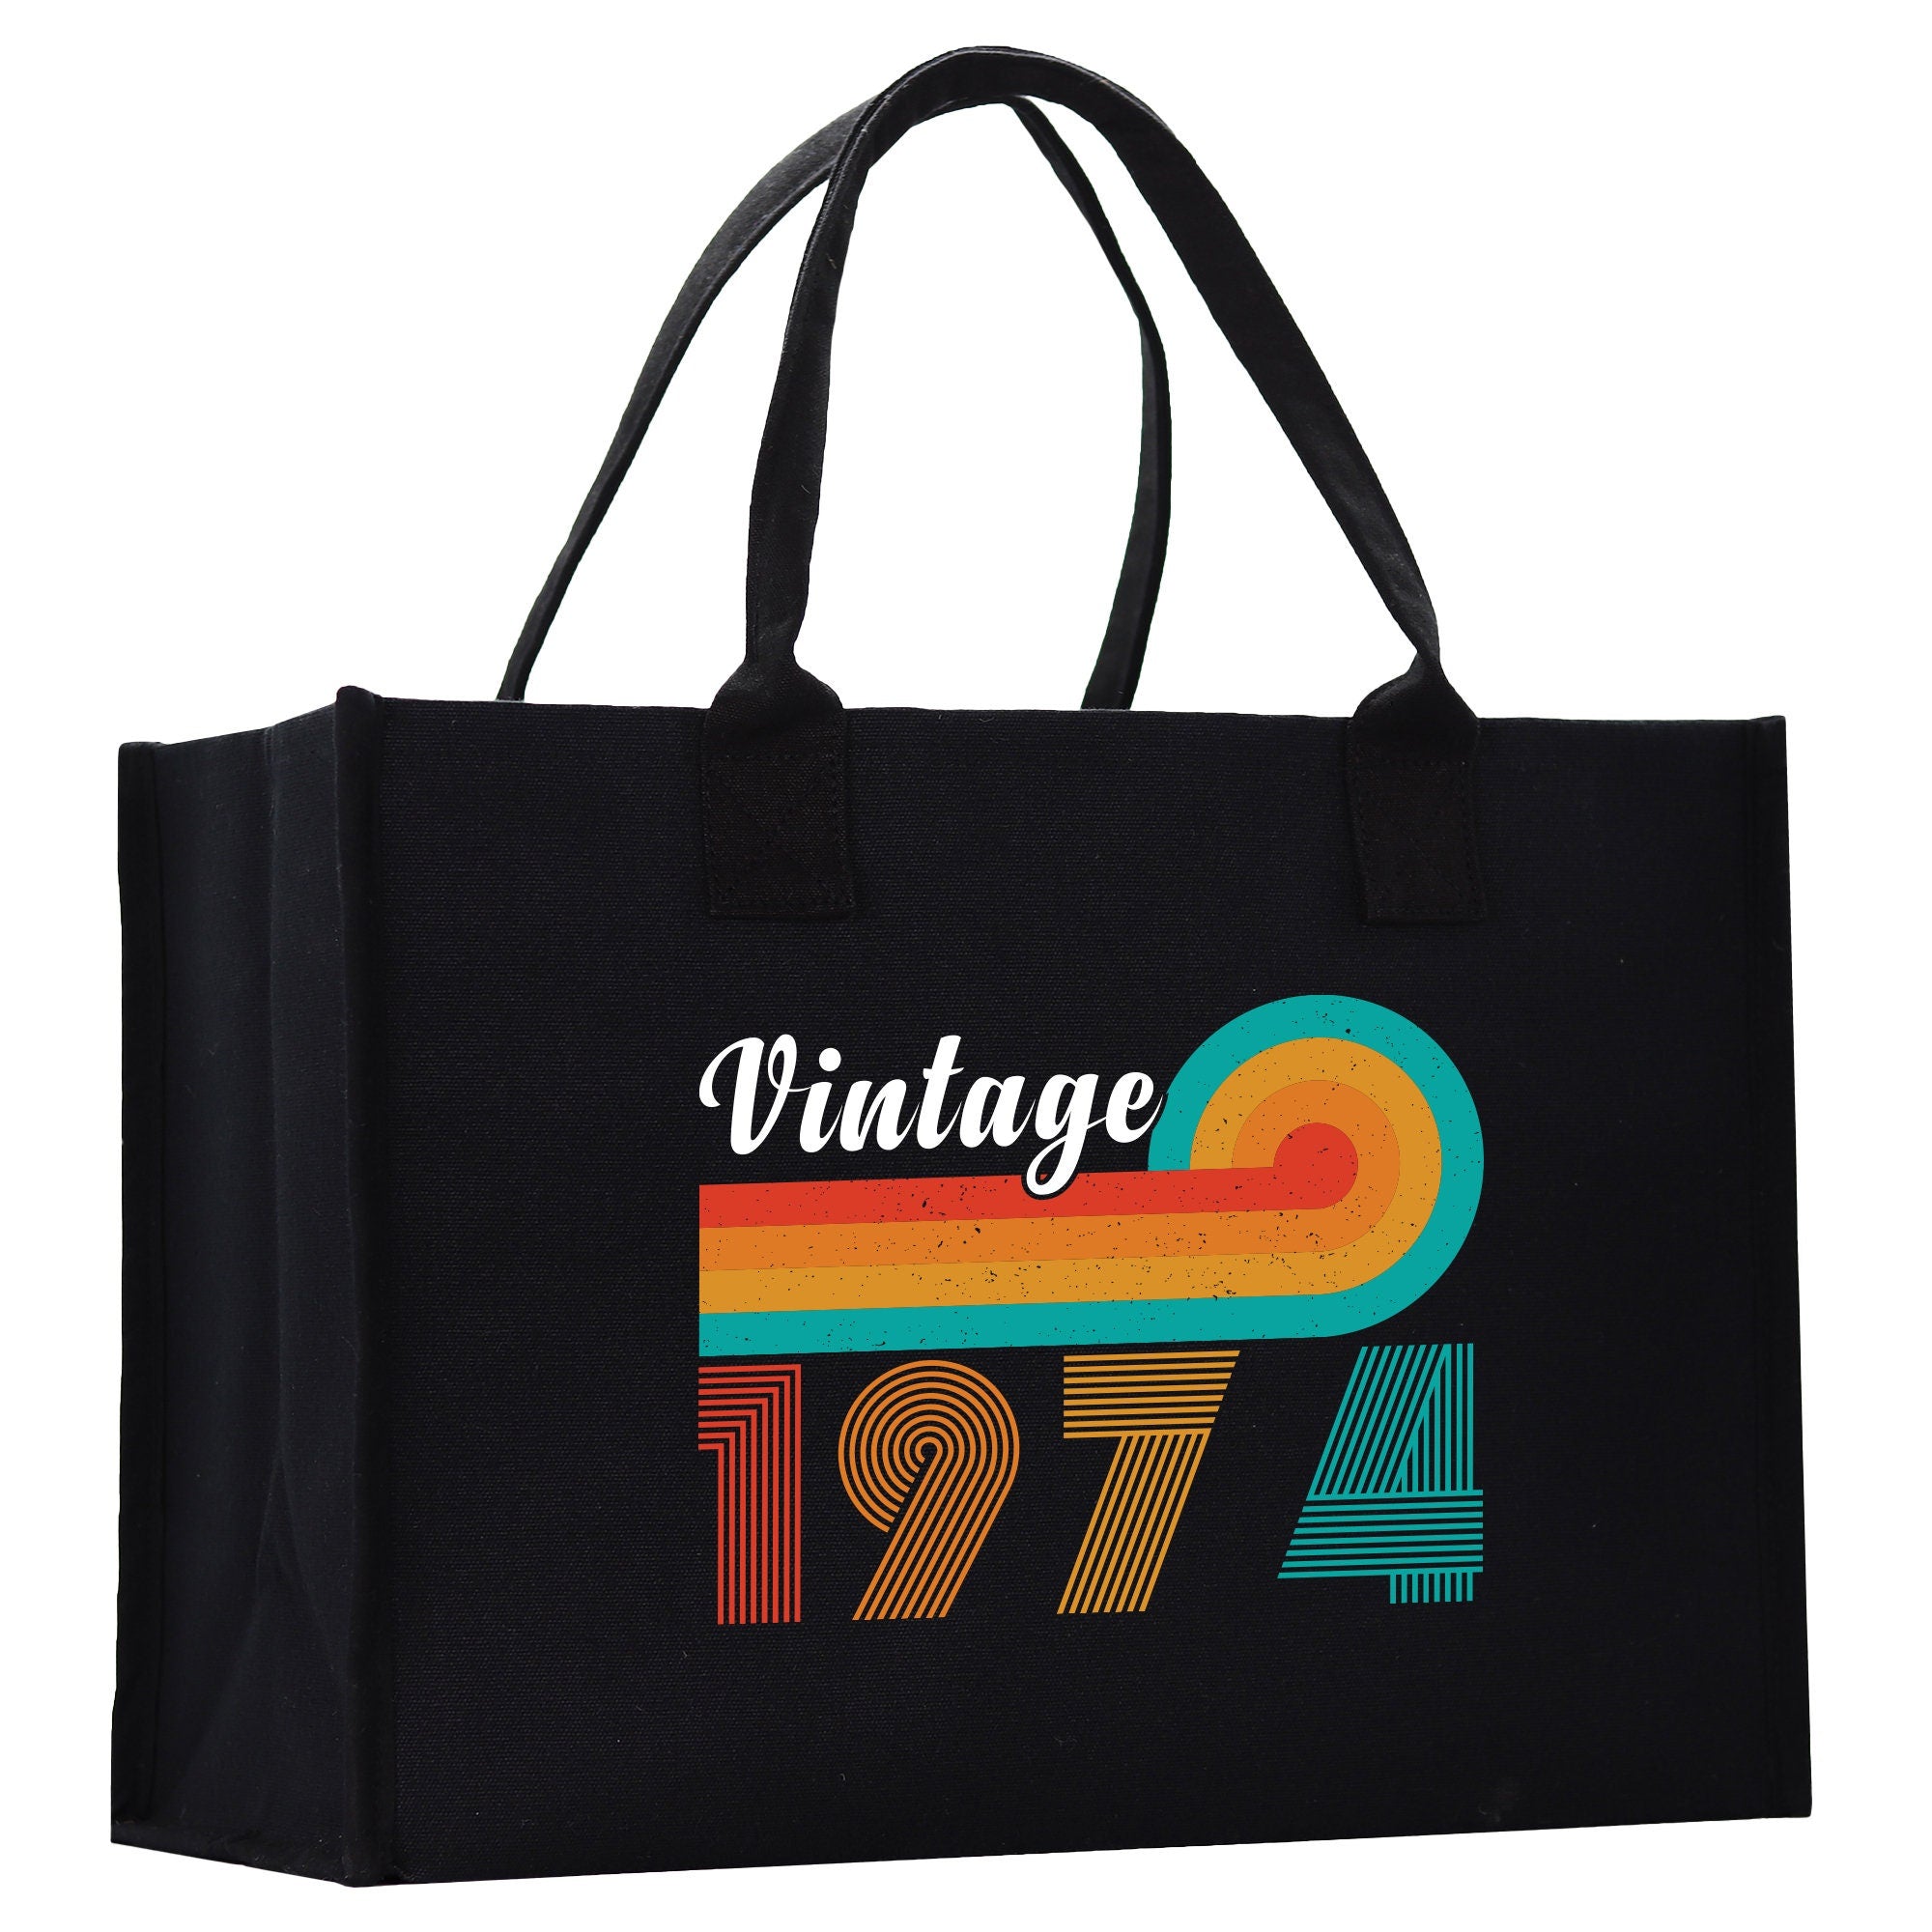 a black shopping bag with a vintage 1971 design